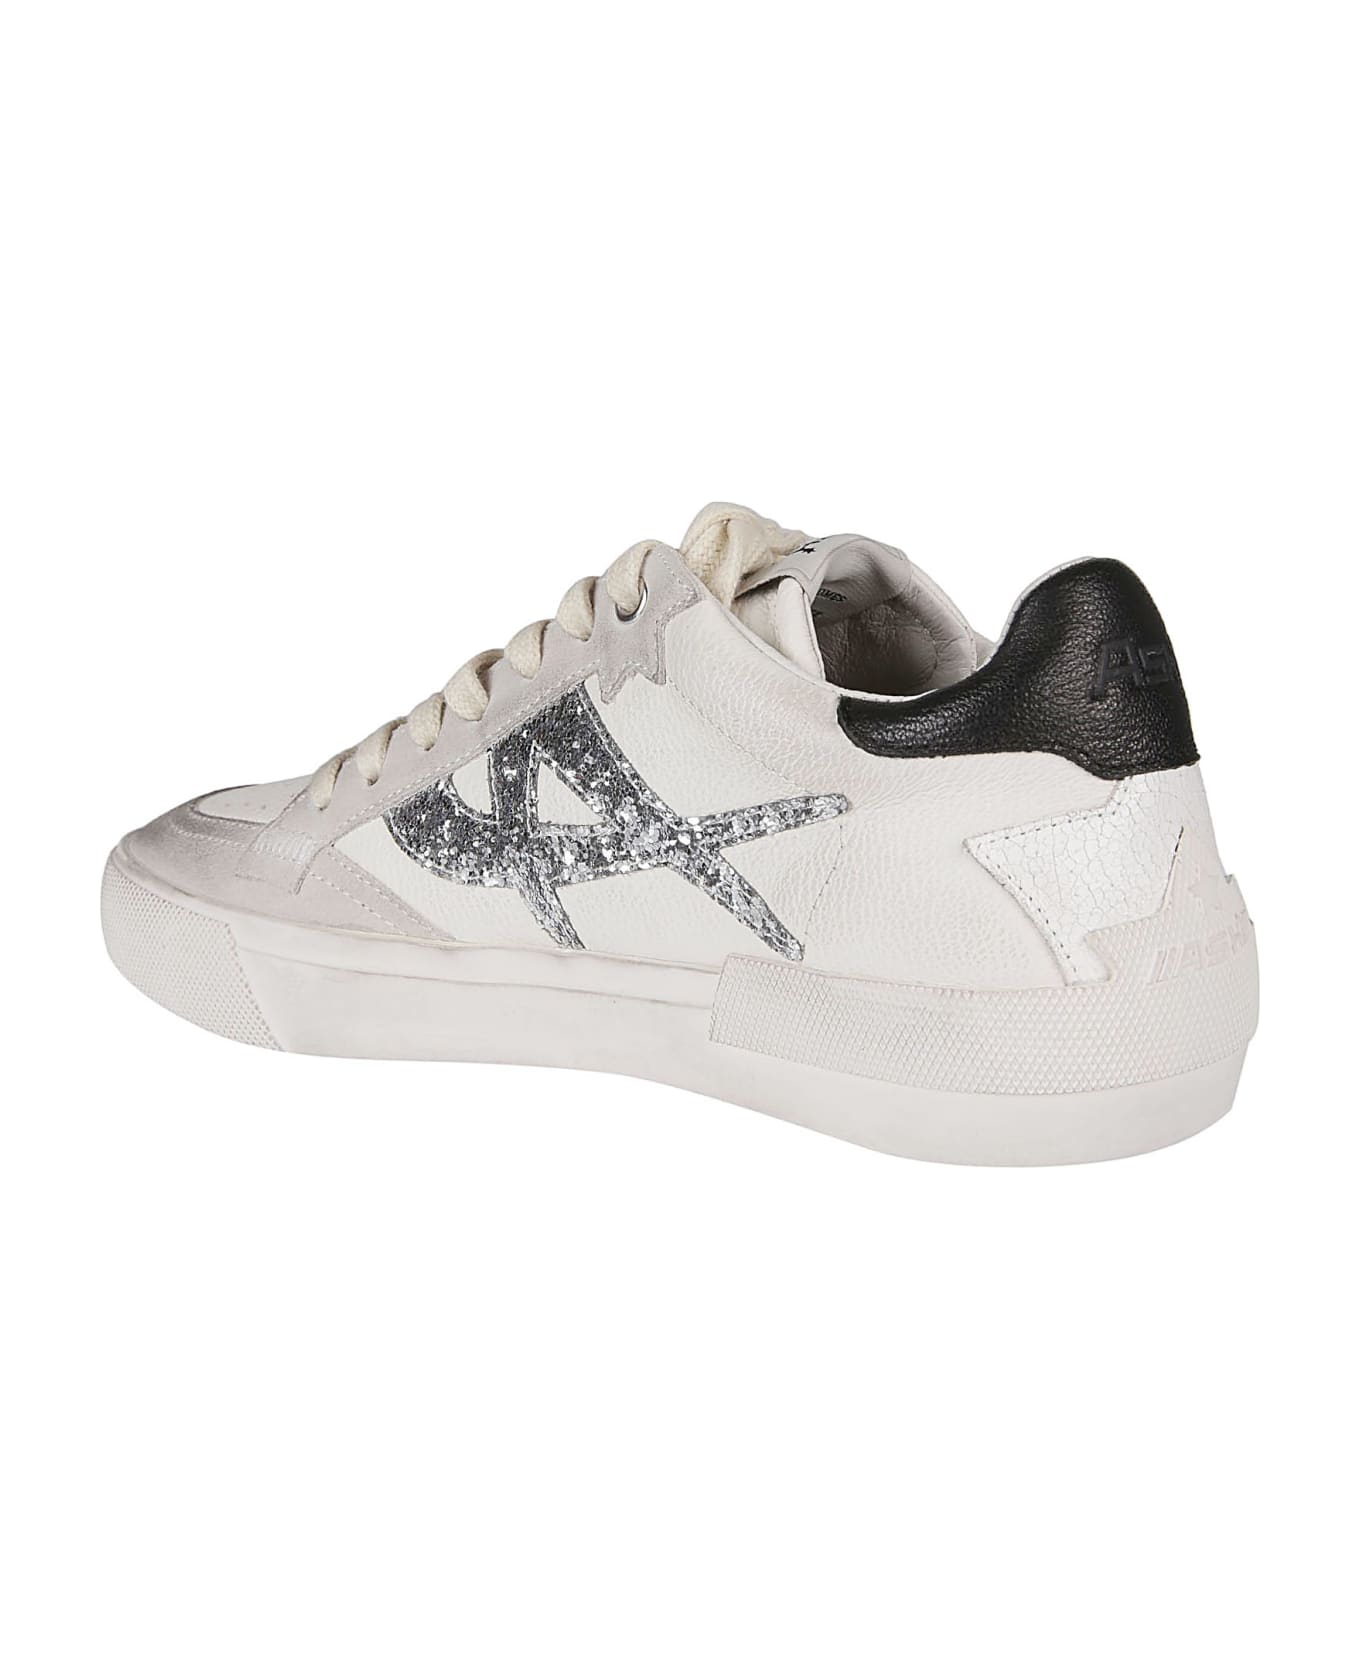 Ash Moonlight Sneakers - White/silver/black スニーカー